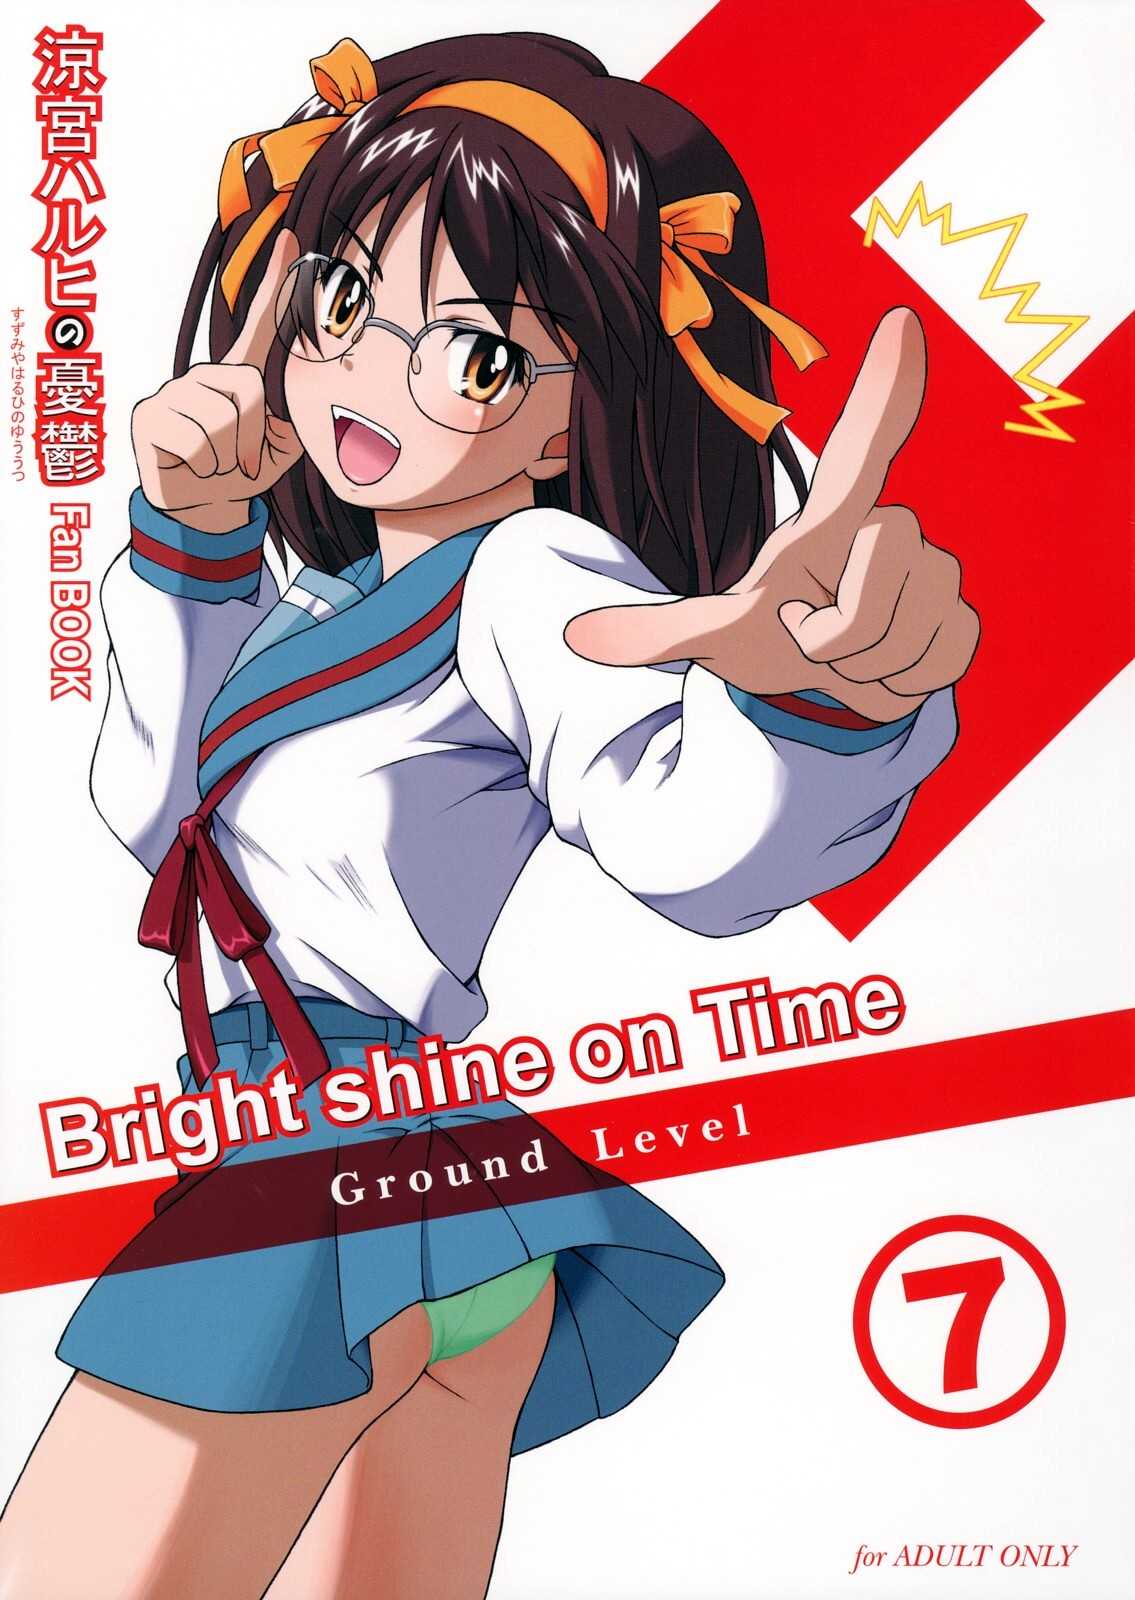 [Ground Level] Bright shine on Time 7 